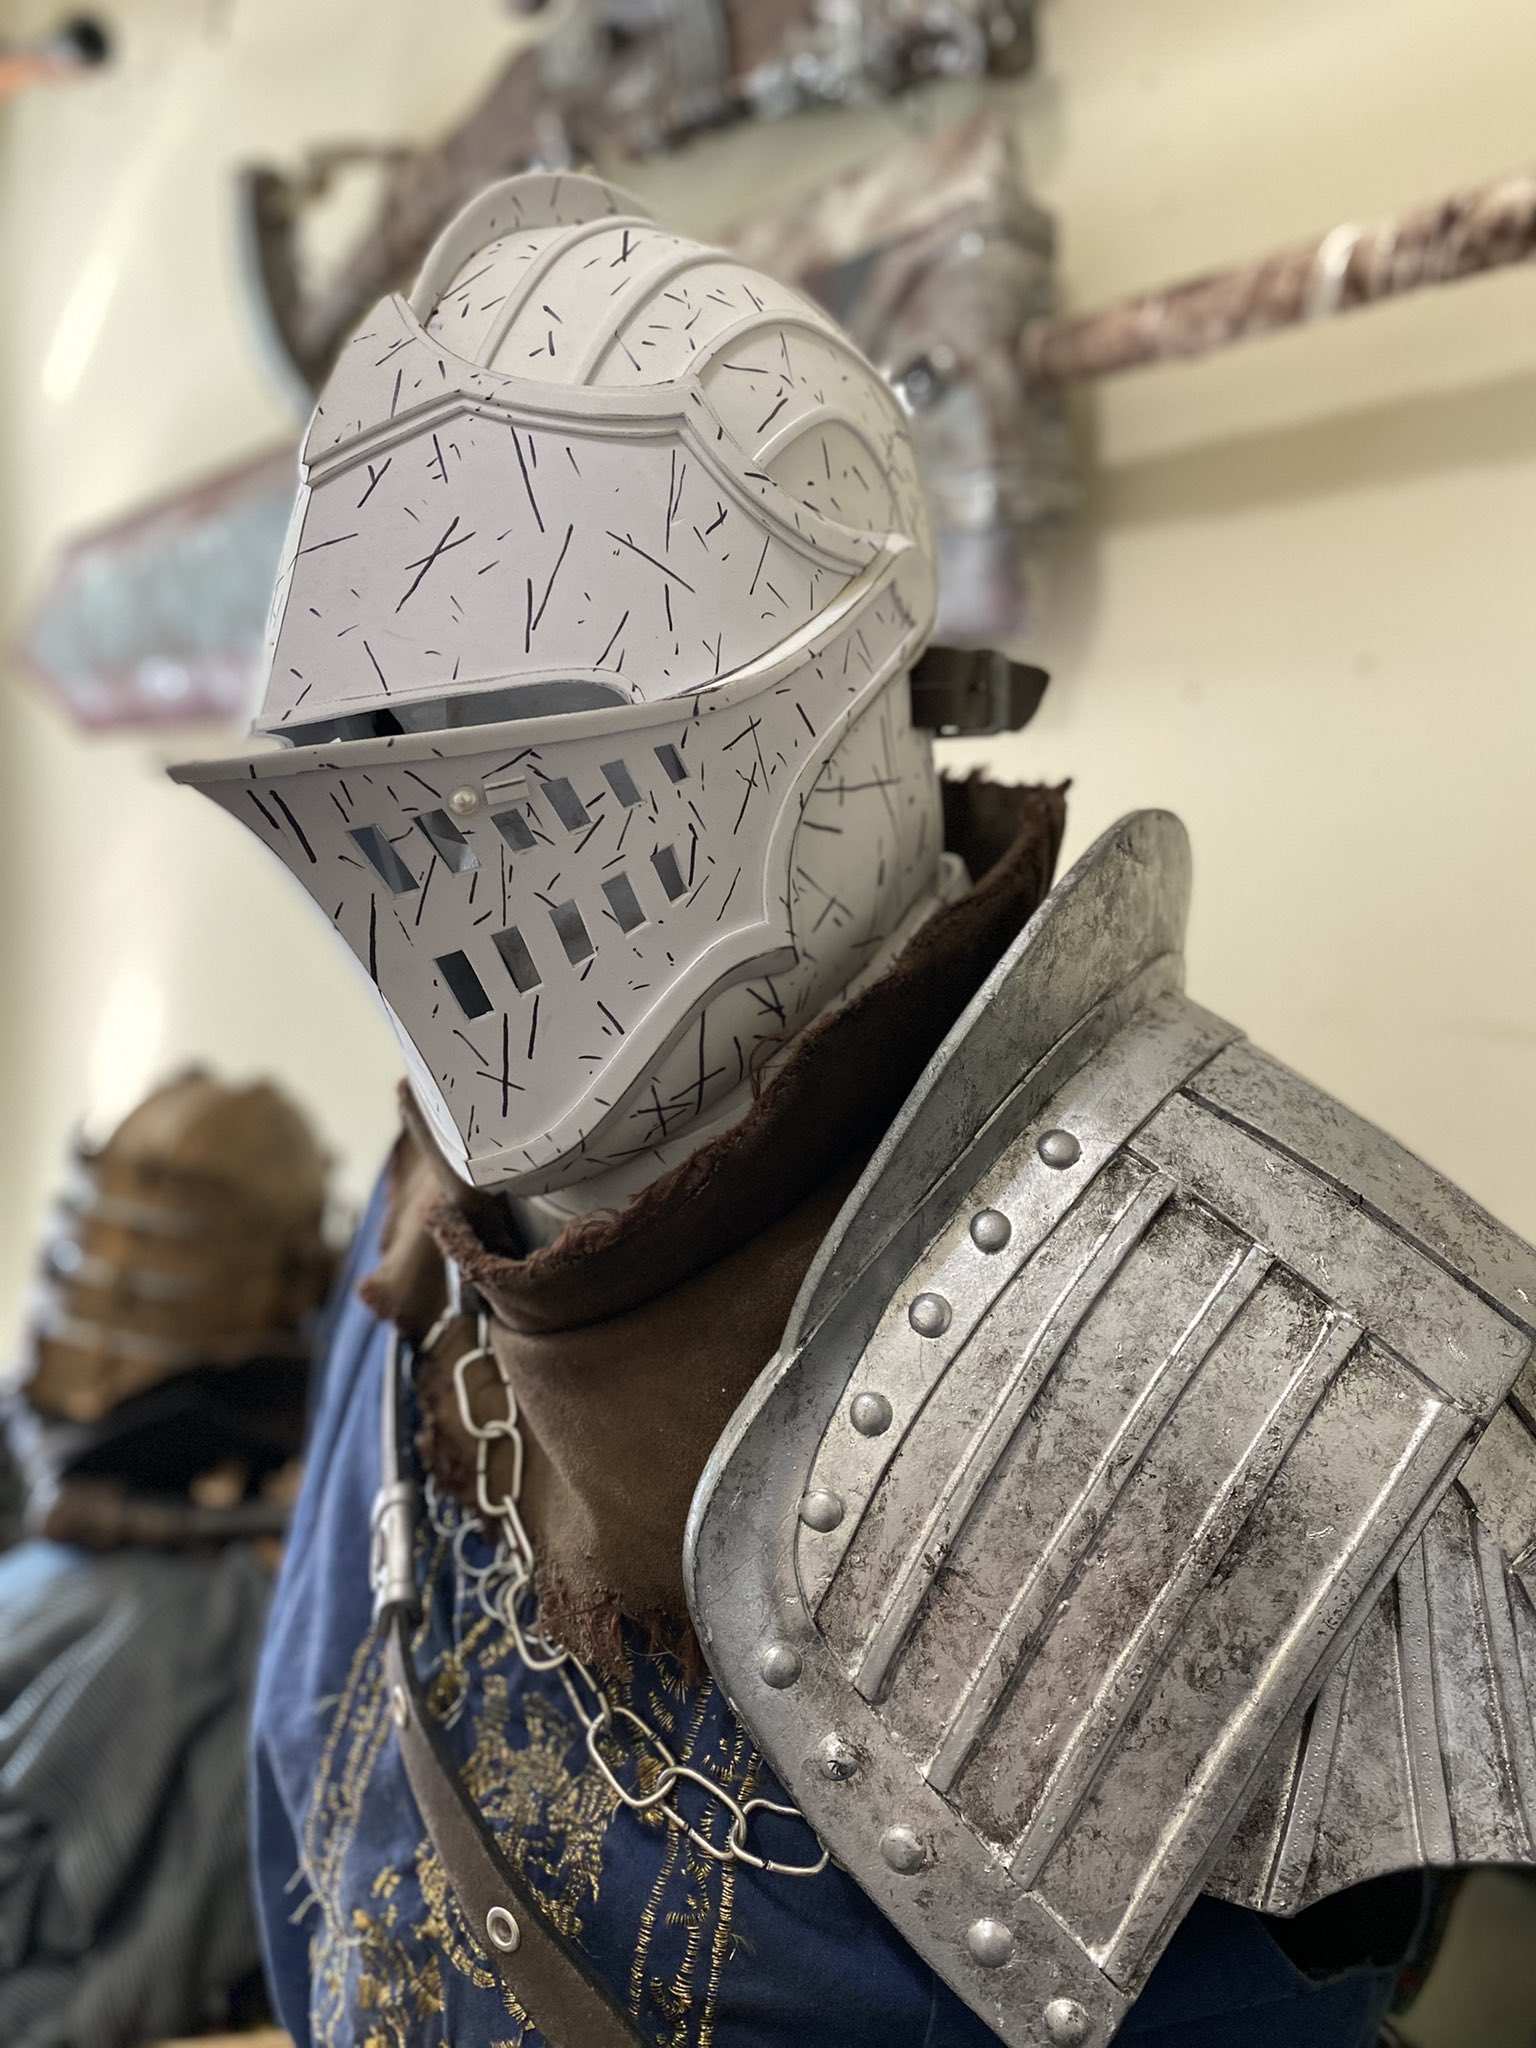 elite knight helmet